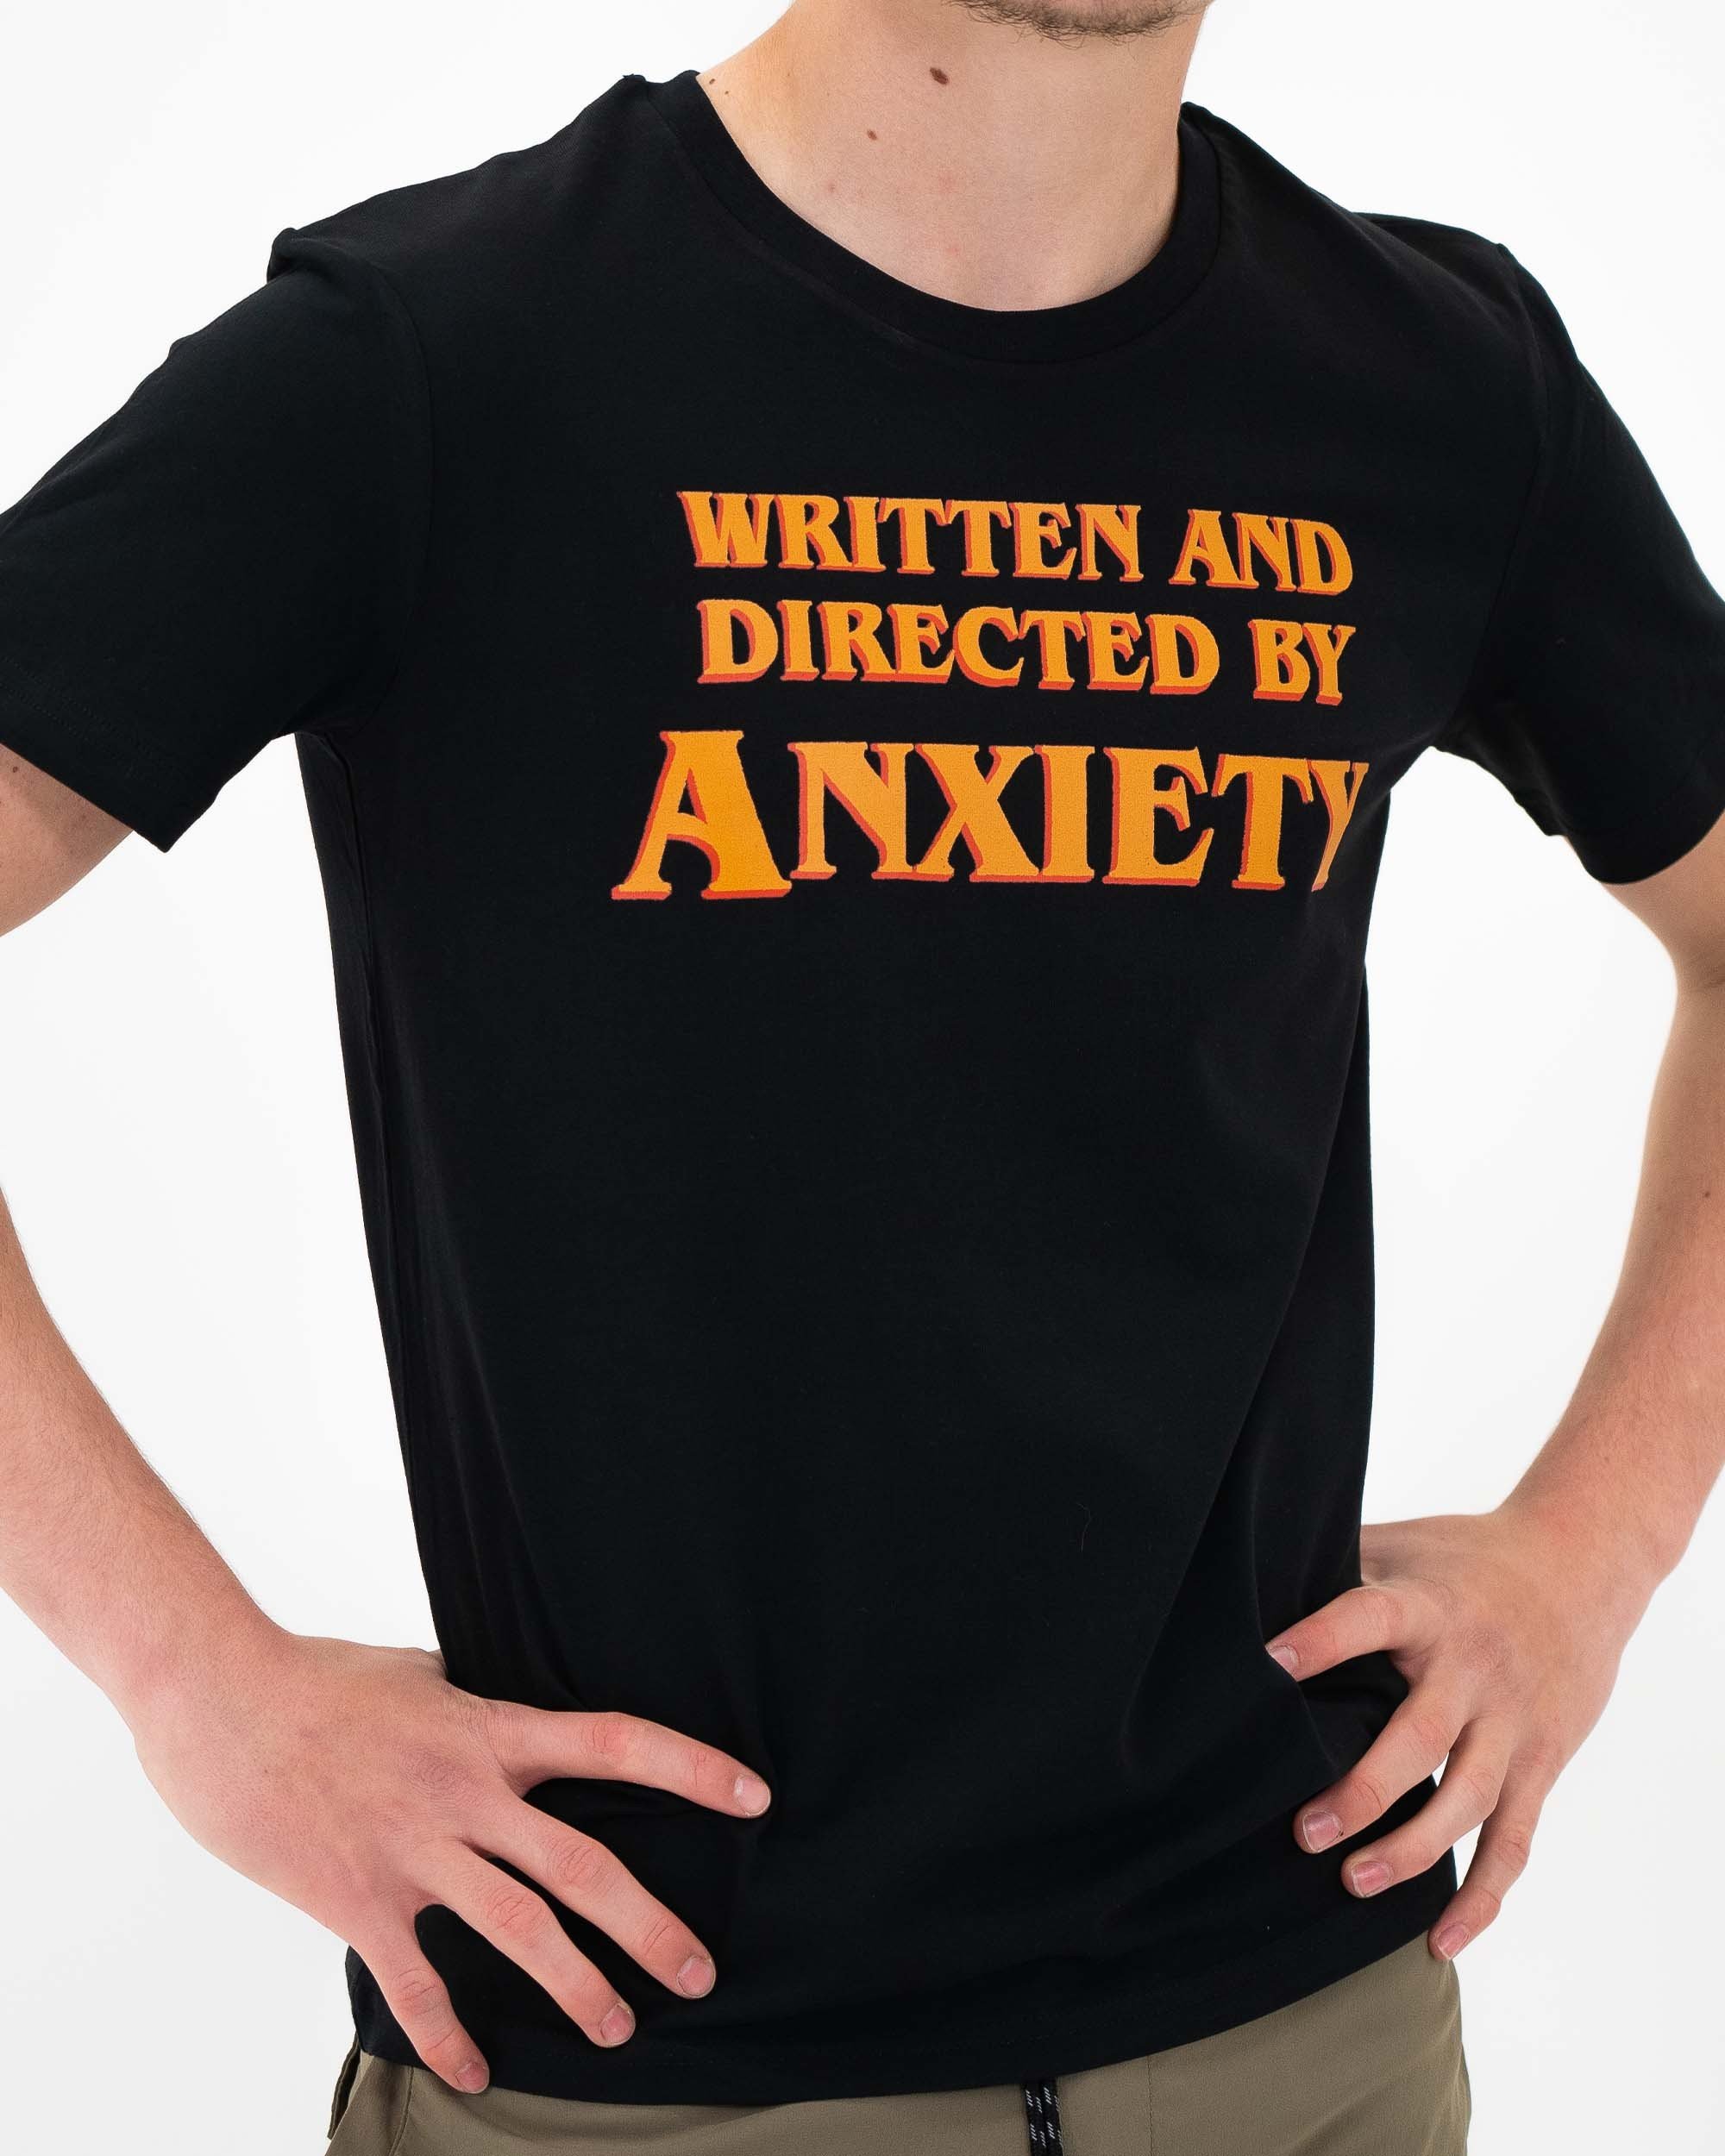 T-shirt Anxiety de couleur Noir par rodrigobhz